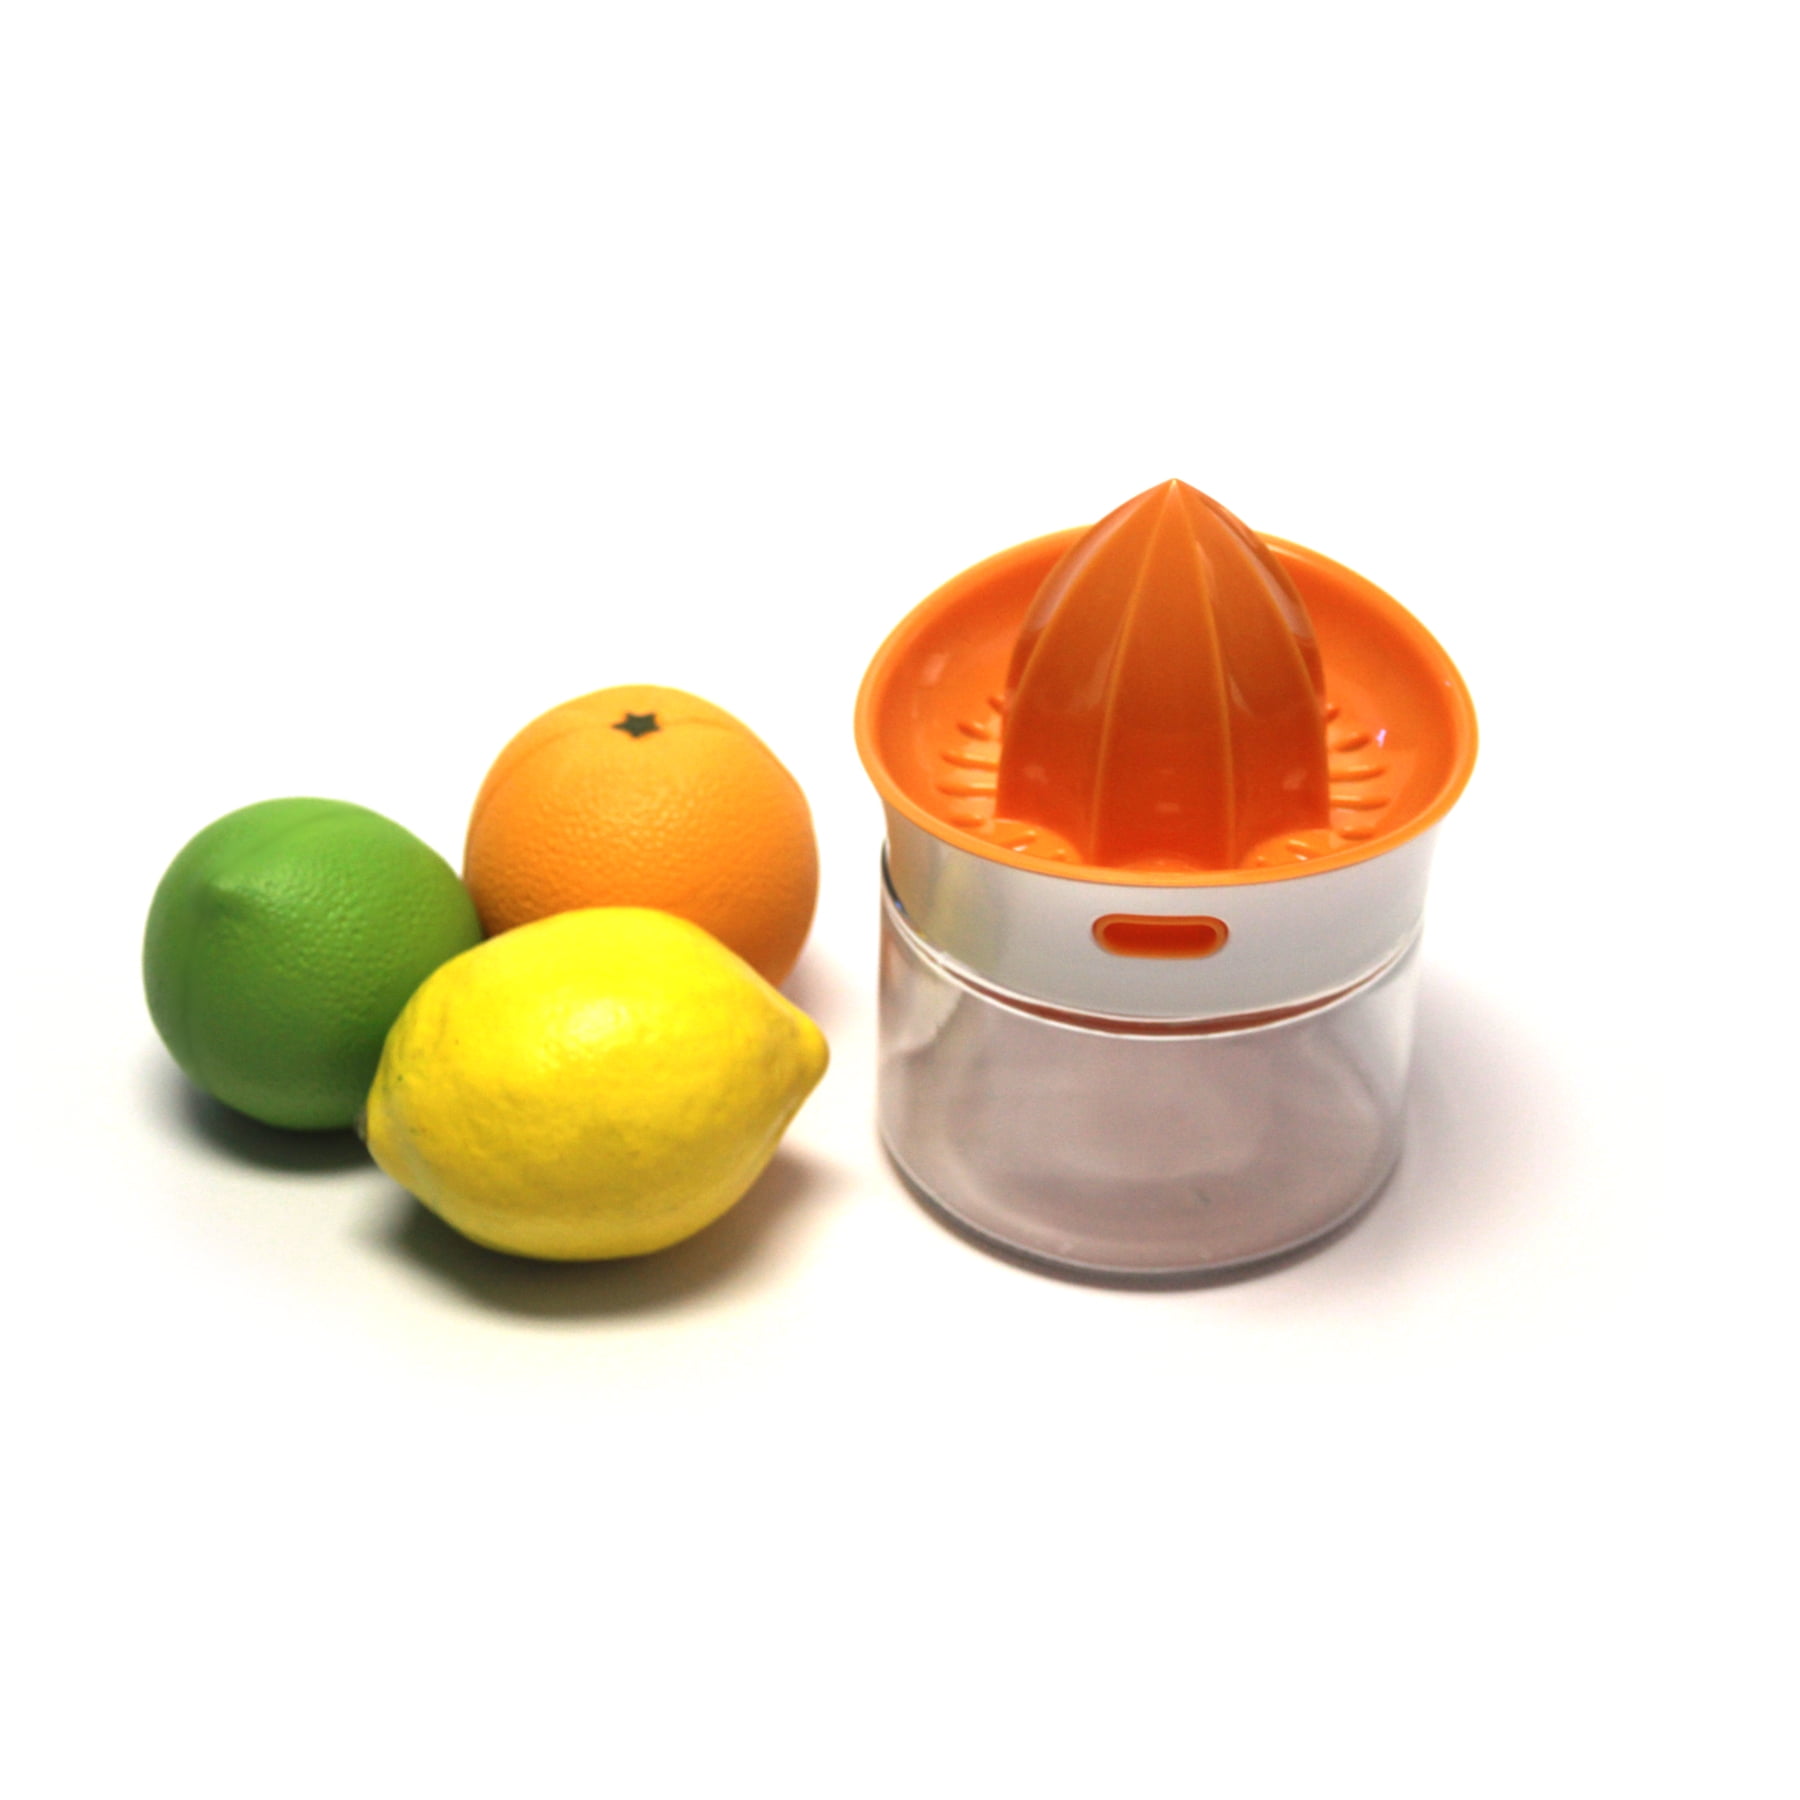 Yellow Joie 29379 Citrus Lemon//Lime Juicer and Vaporiser